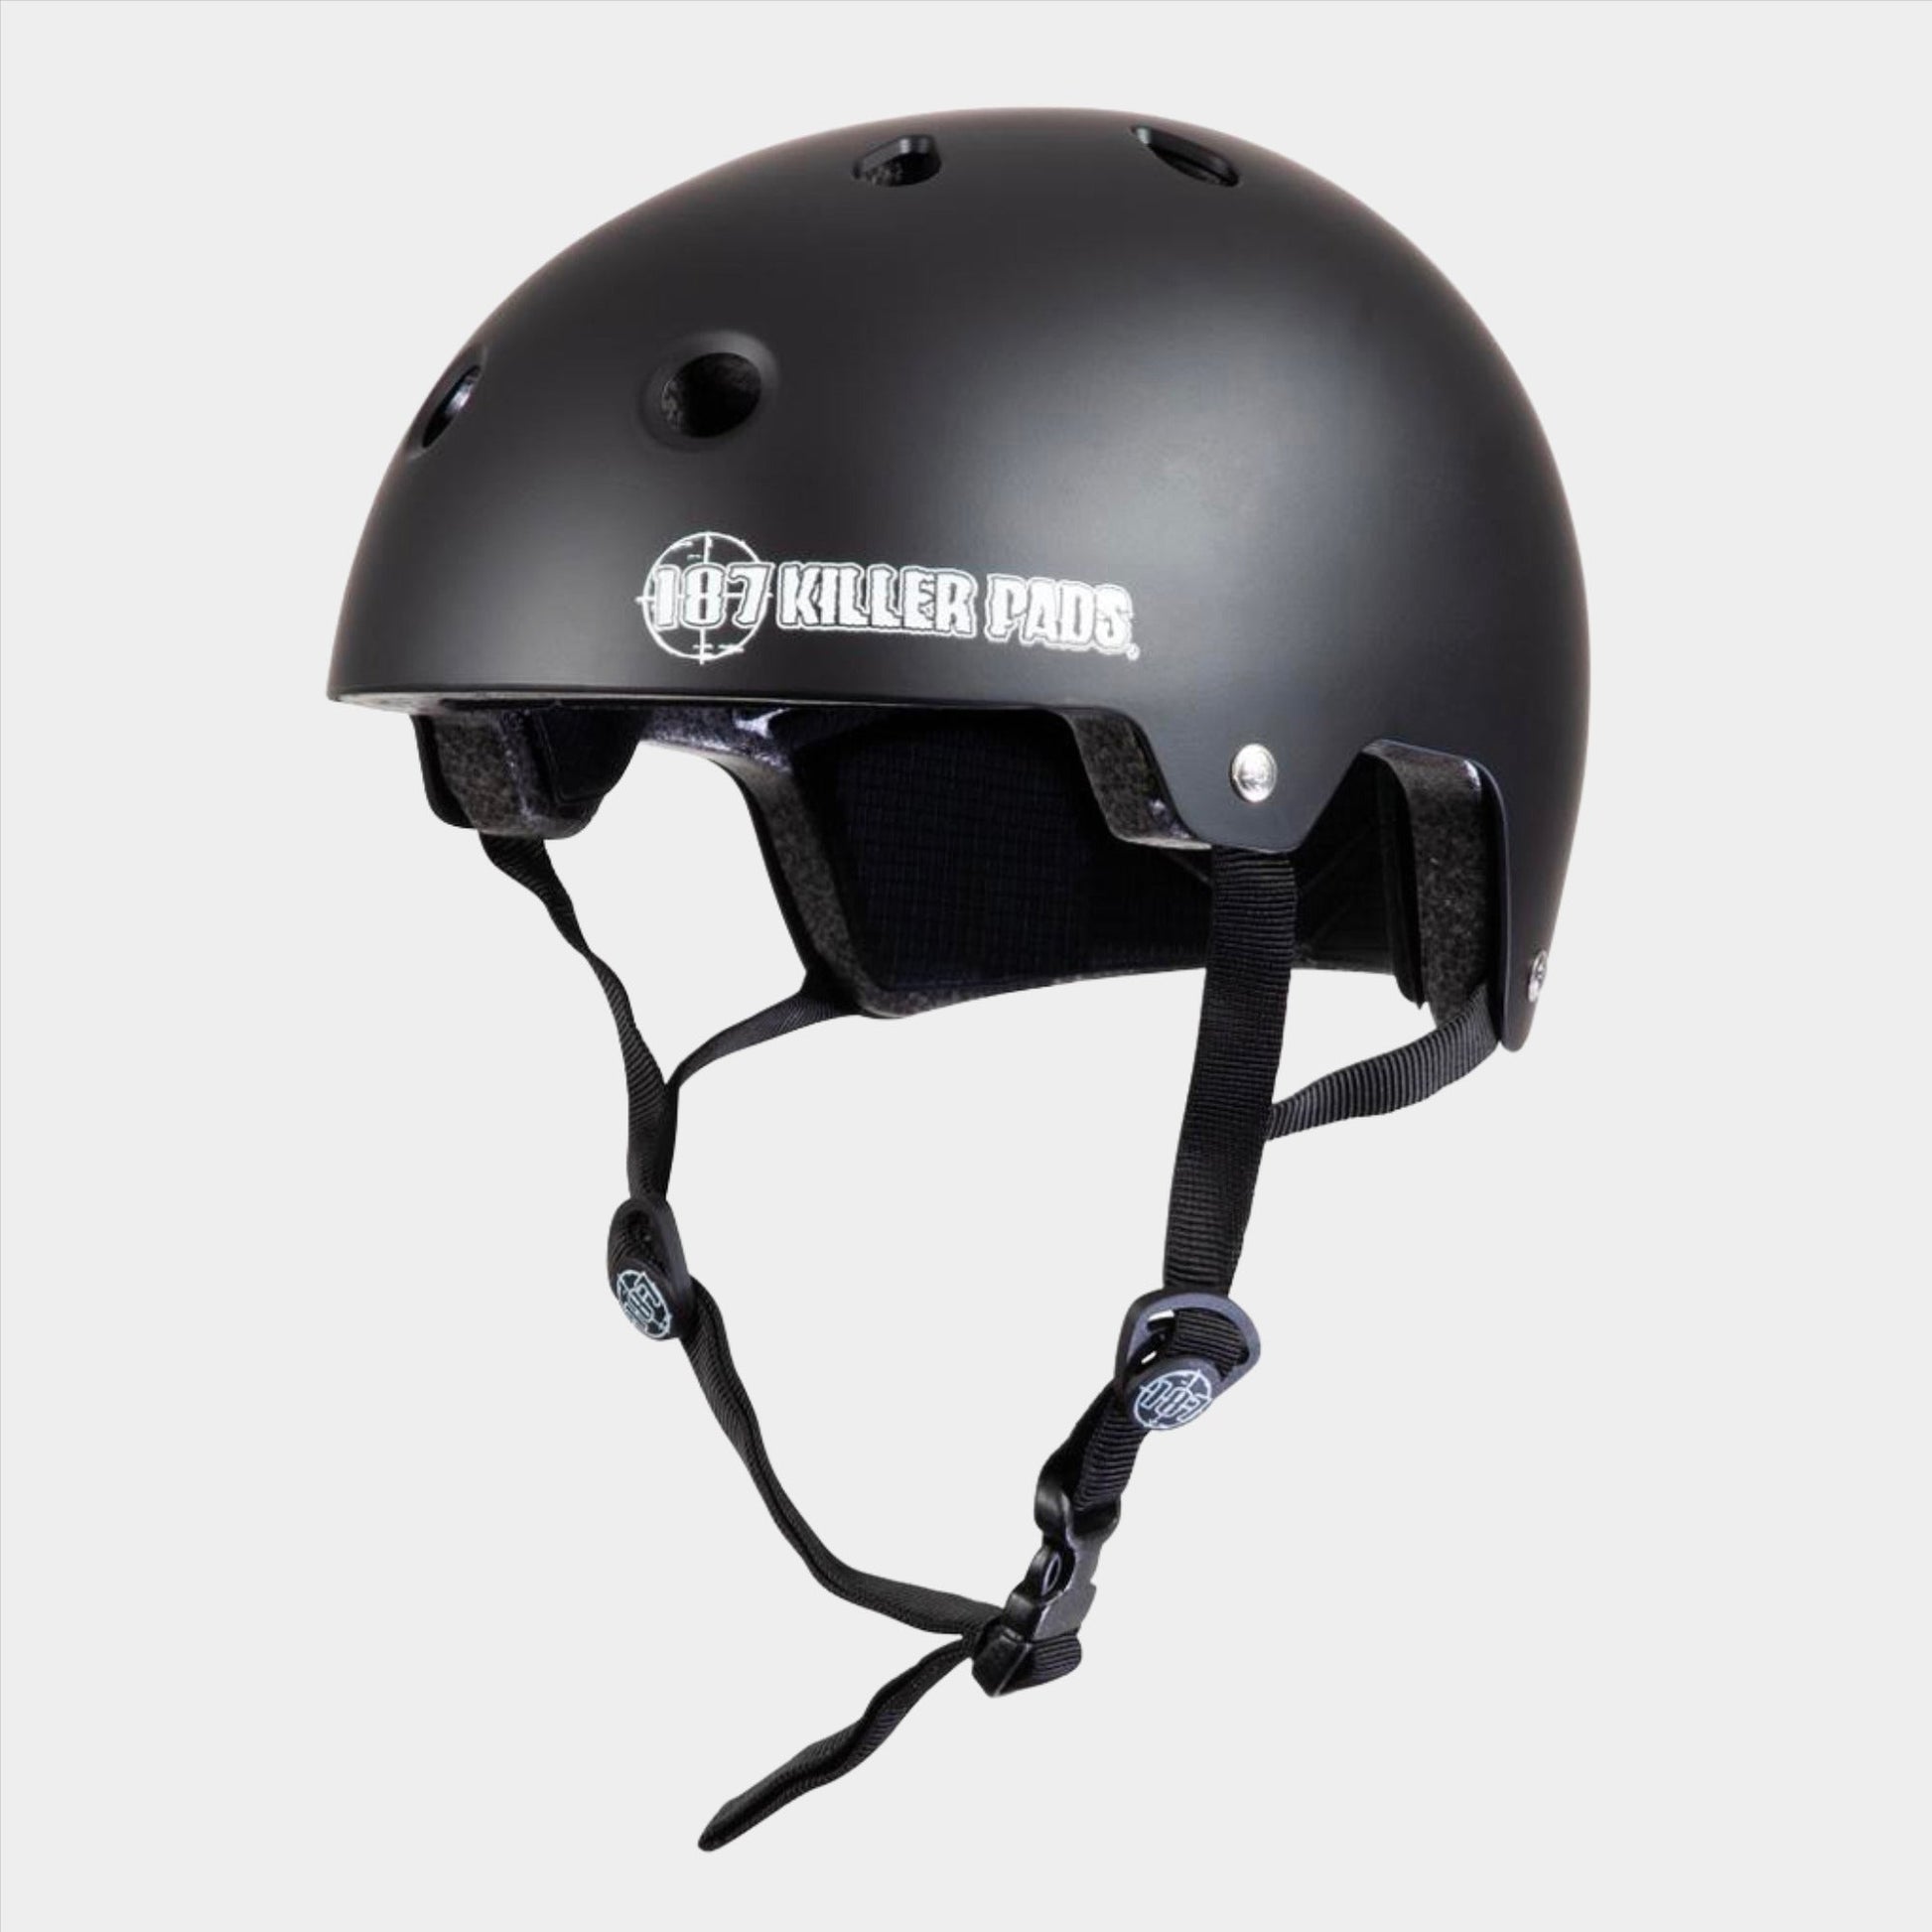 187 Killer Pads Helmet - Matte Black - Prime Delux Store